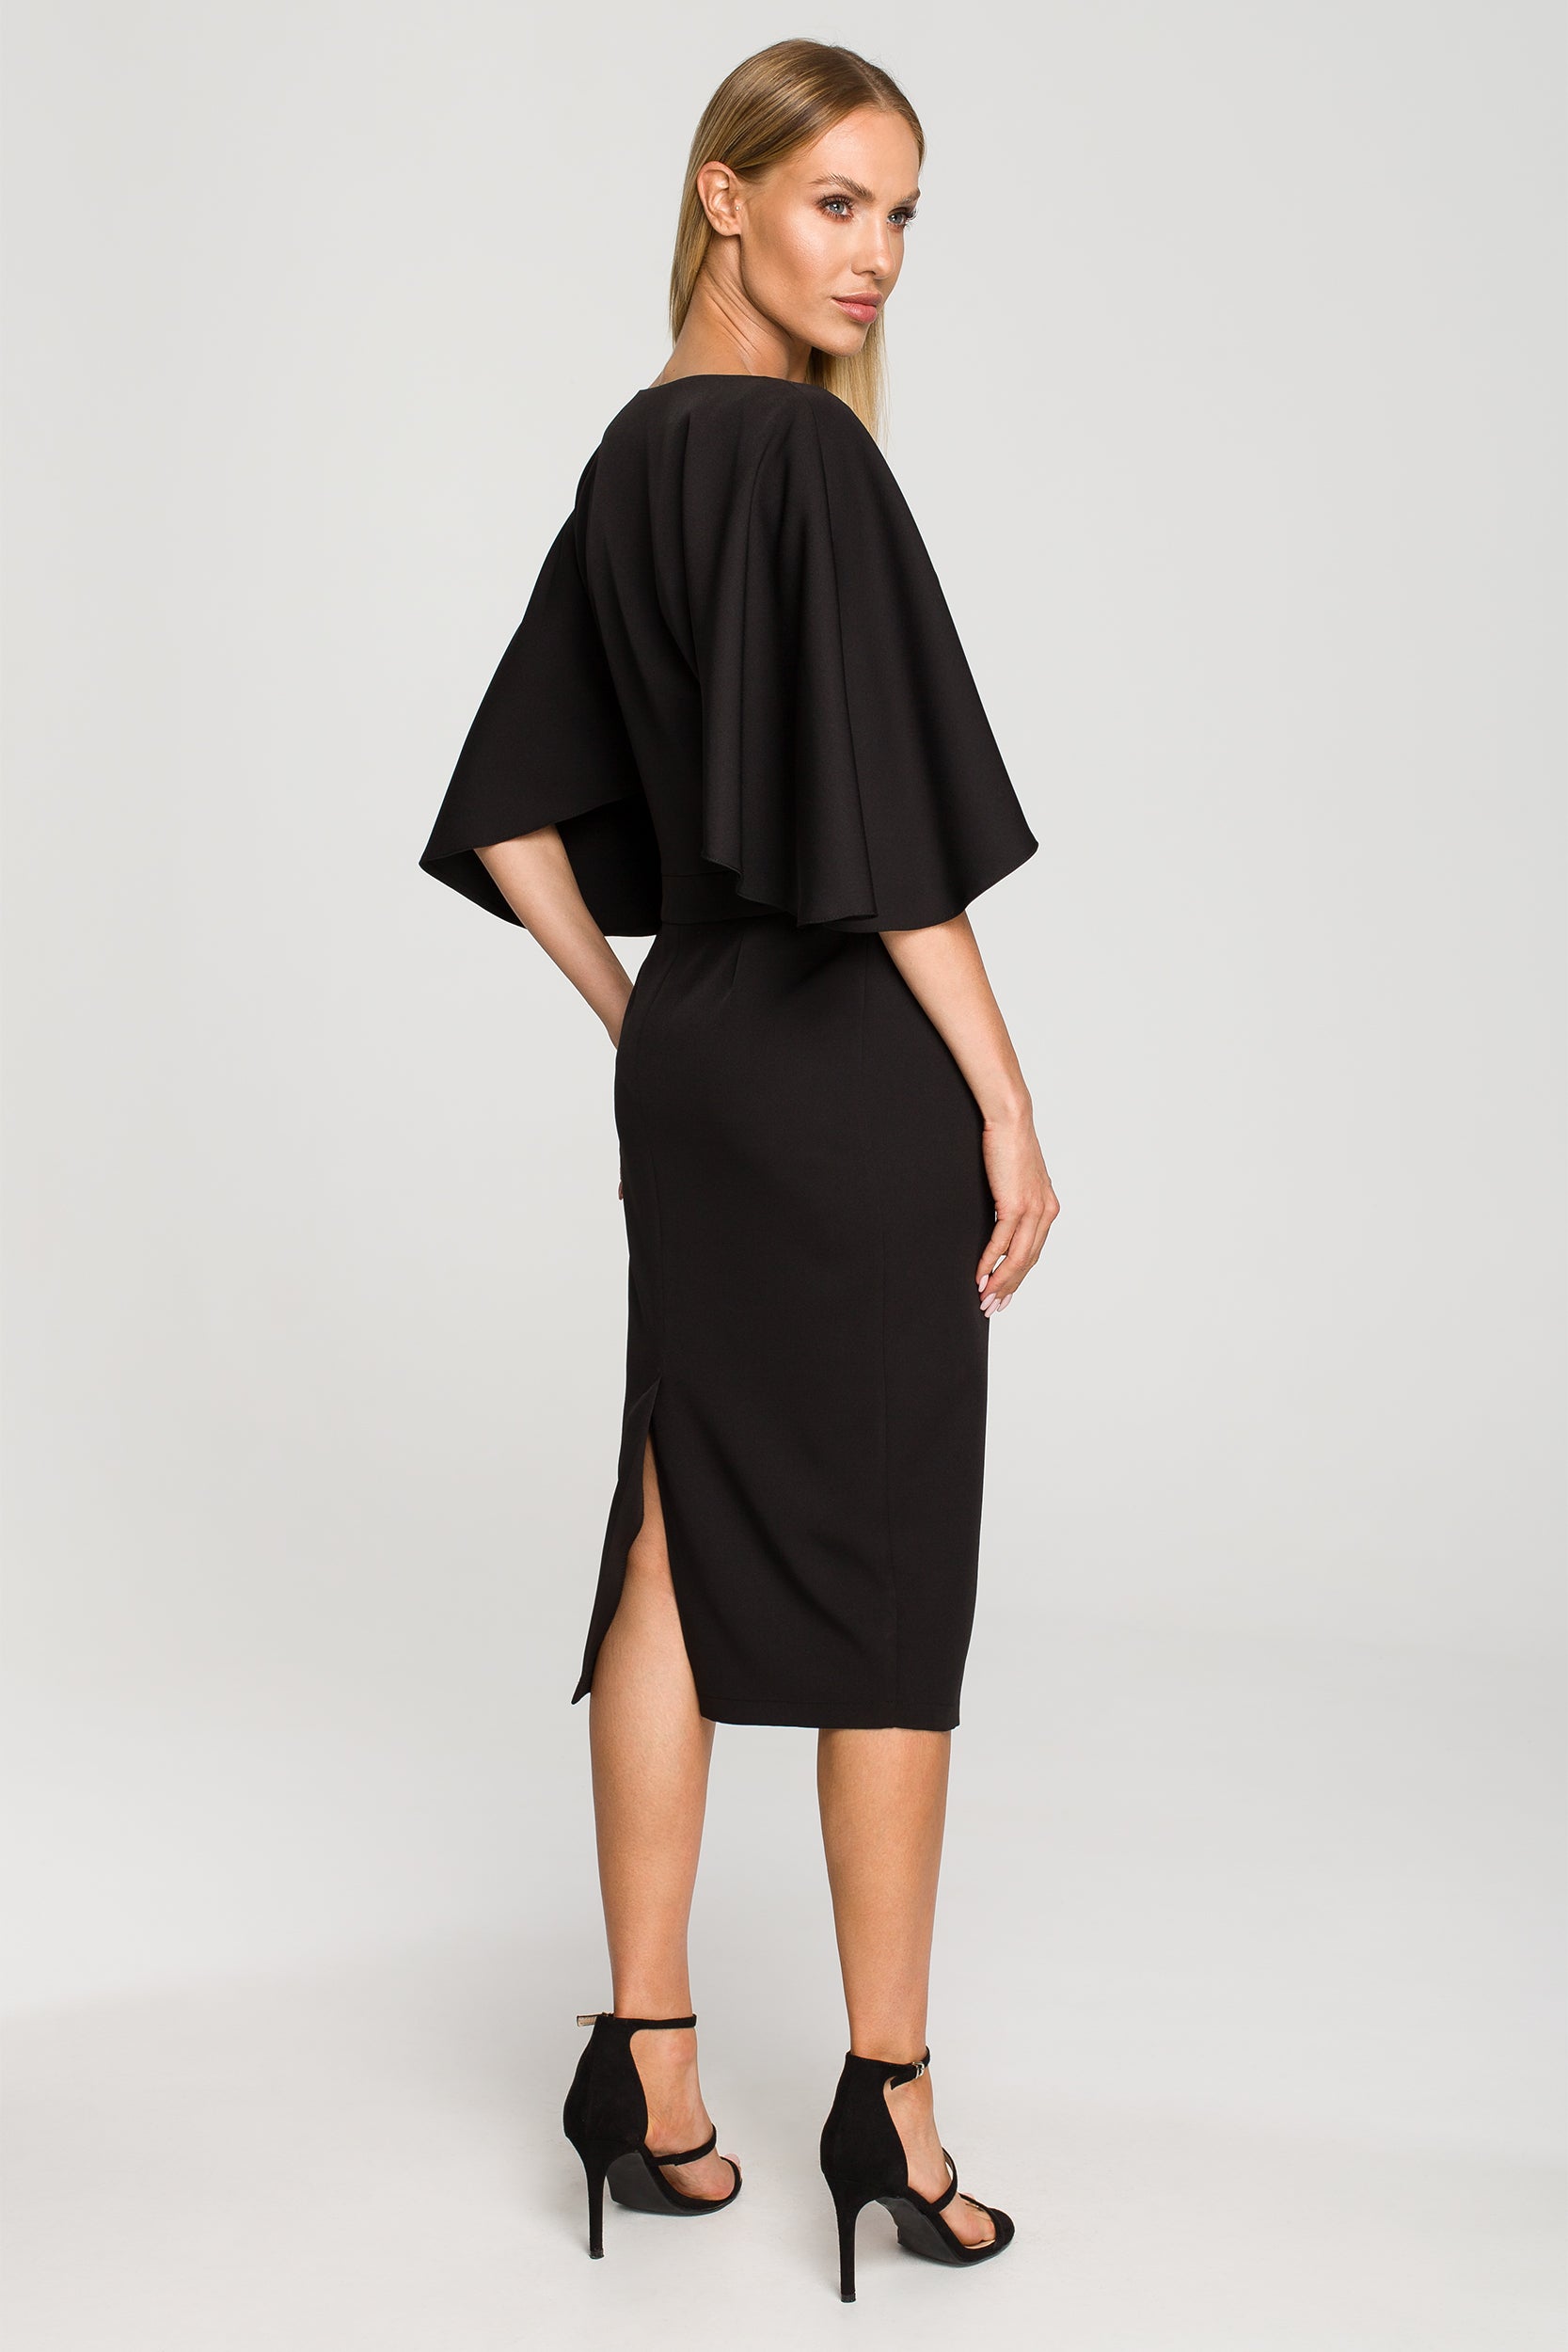 Kimono Sleeve Black Midi Dress